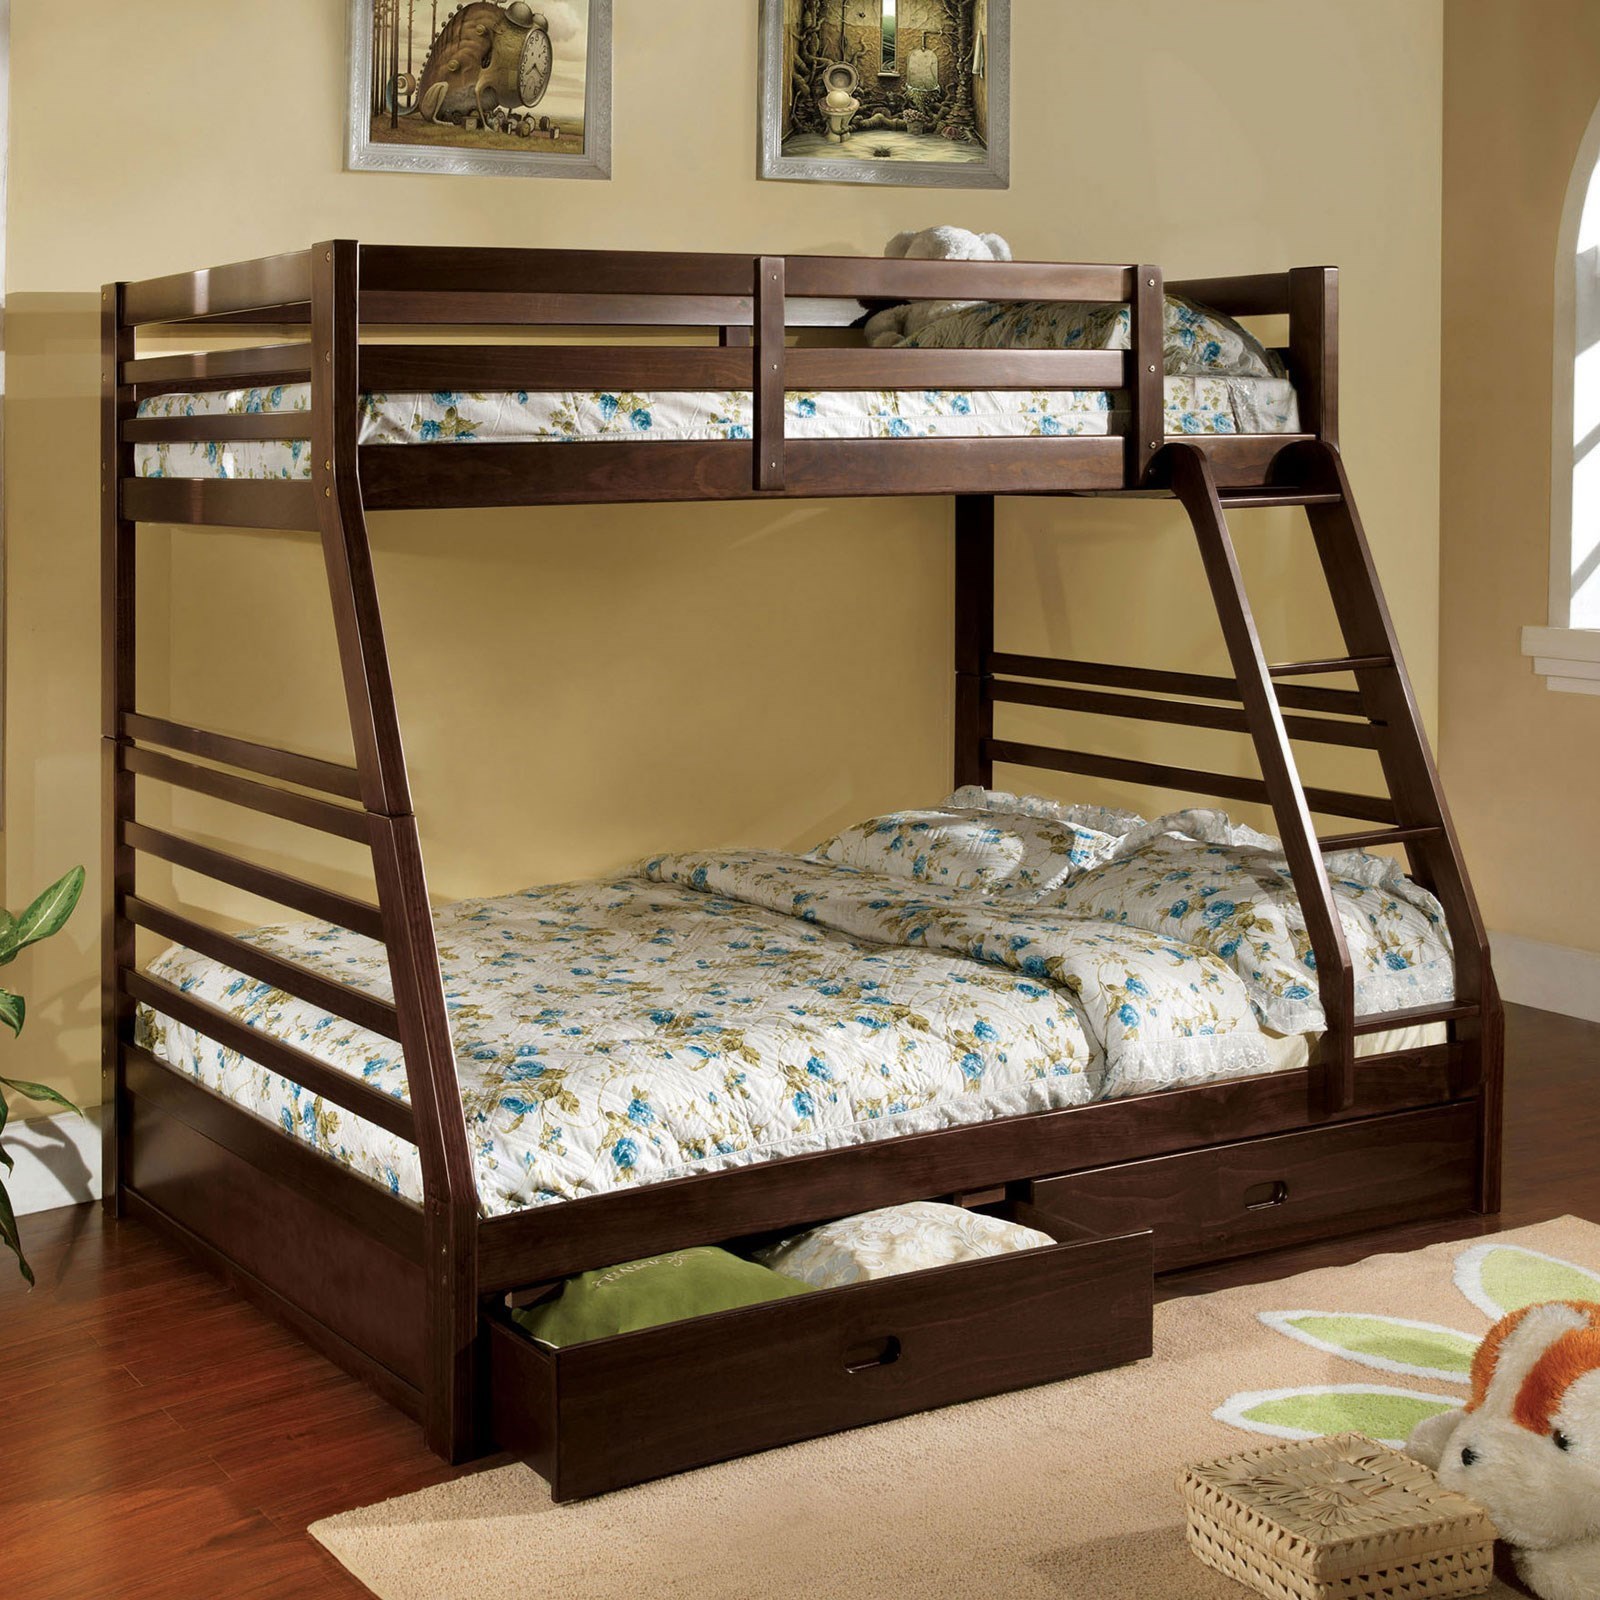 2 full bunk beds